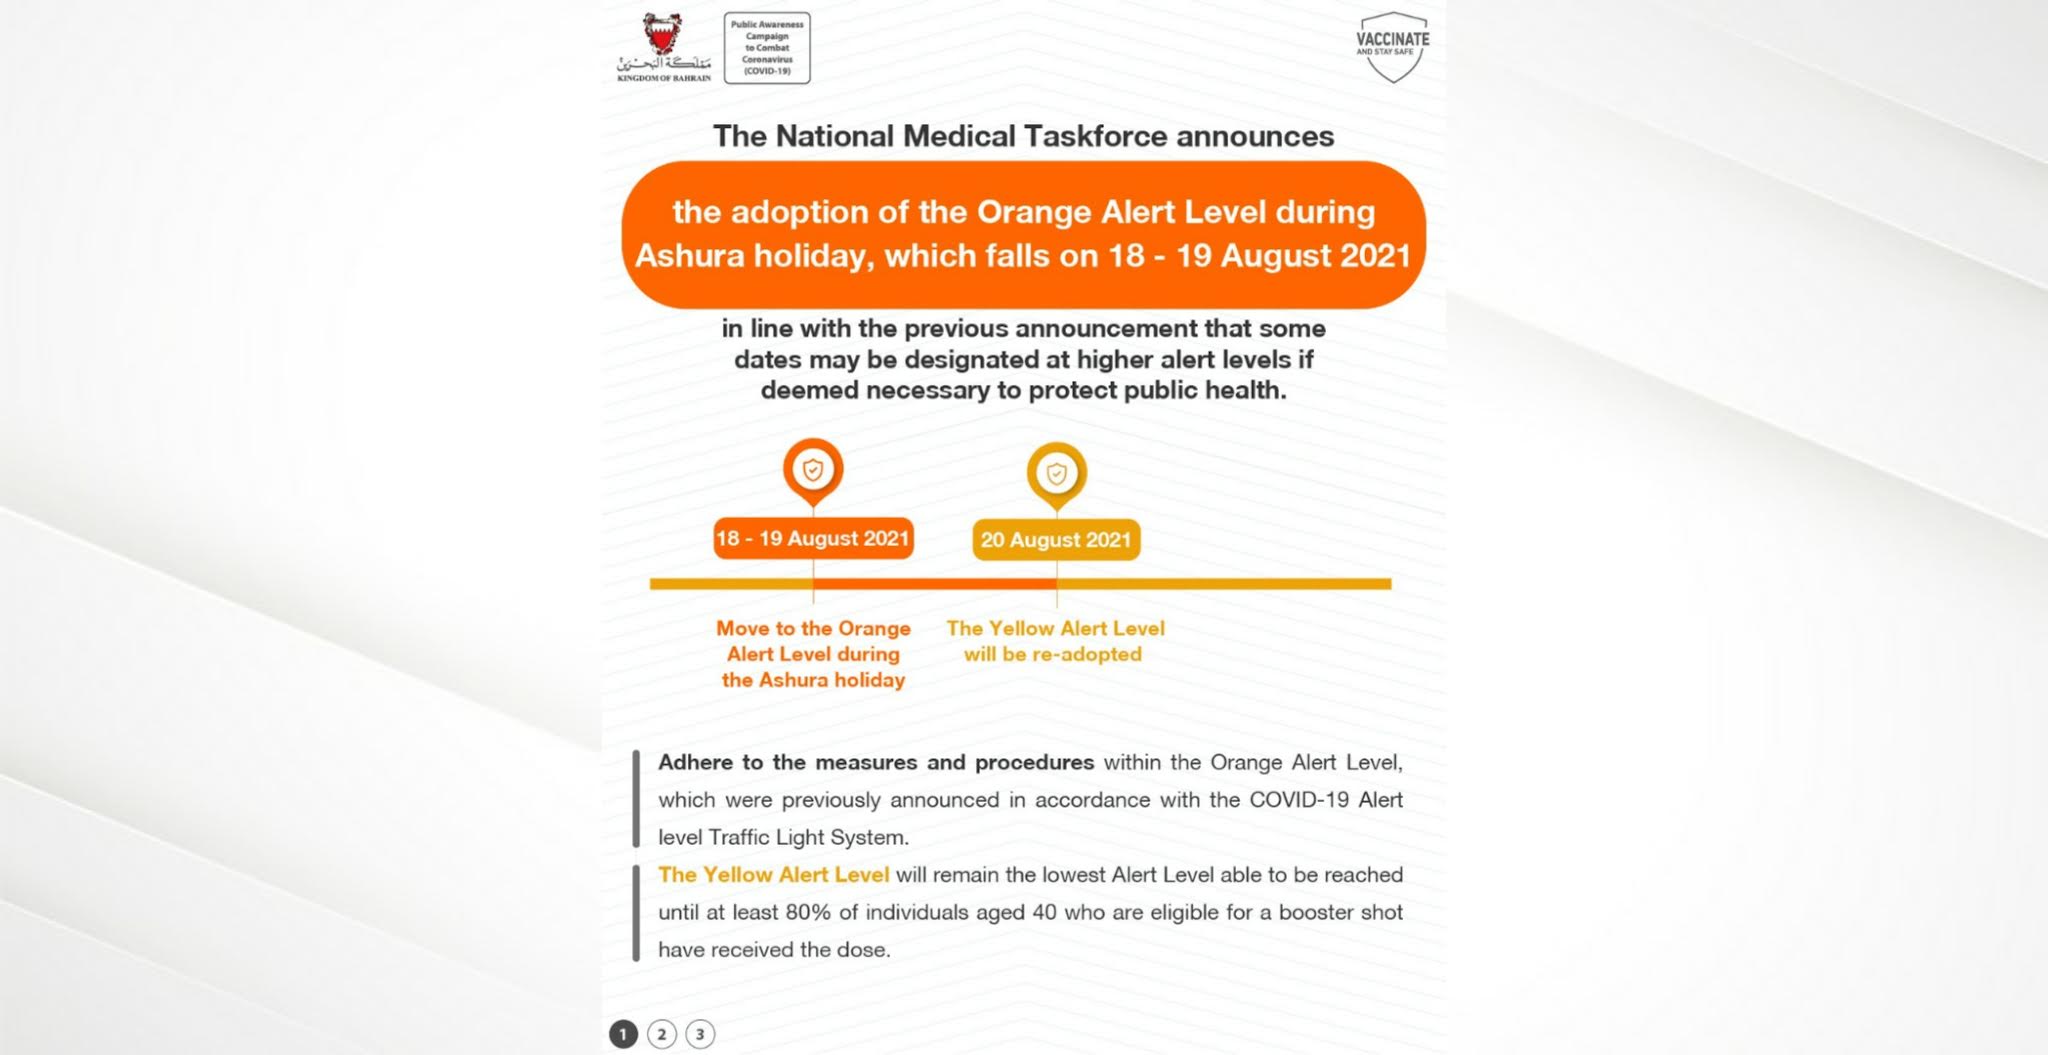 The National Medical Taskforce announces the adoption of the Orange Alert Level during Ashura